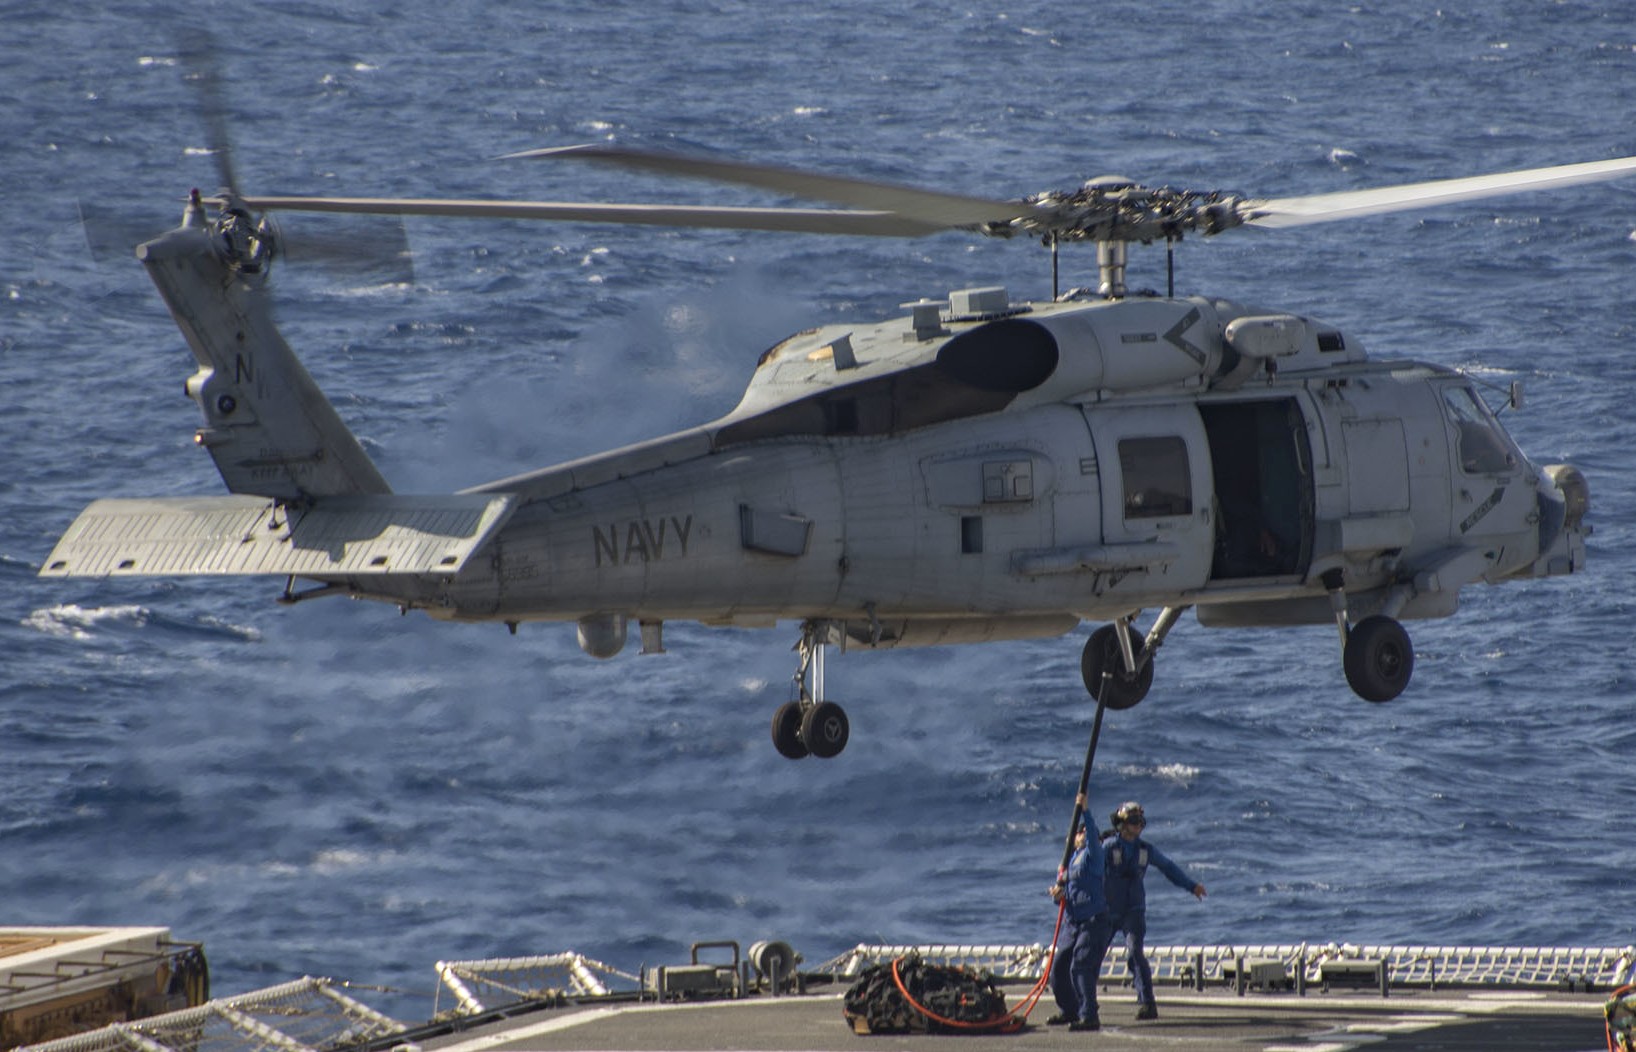 hsm-60 jaguars helicopter maritime strike squadron helmarstrikeron sikorsky mh-60r seahawk navy nas jacksonville florida reserve